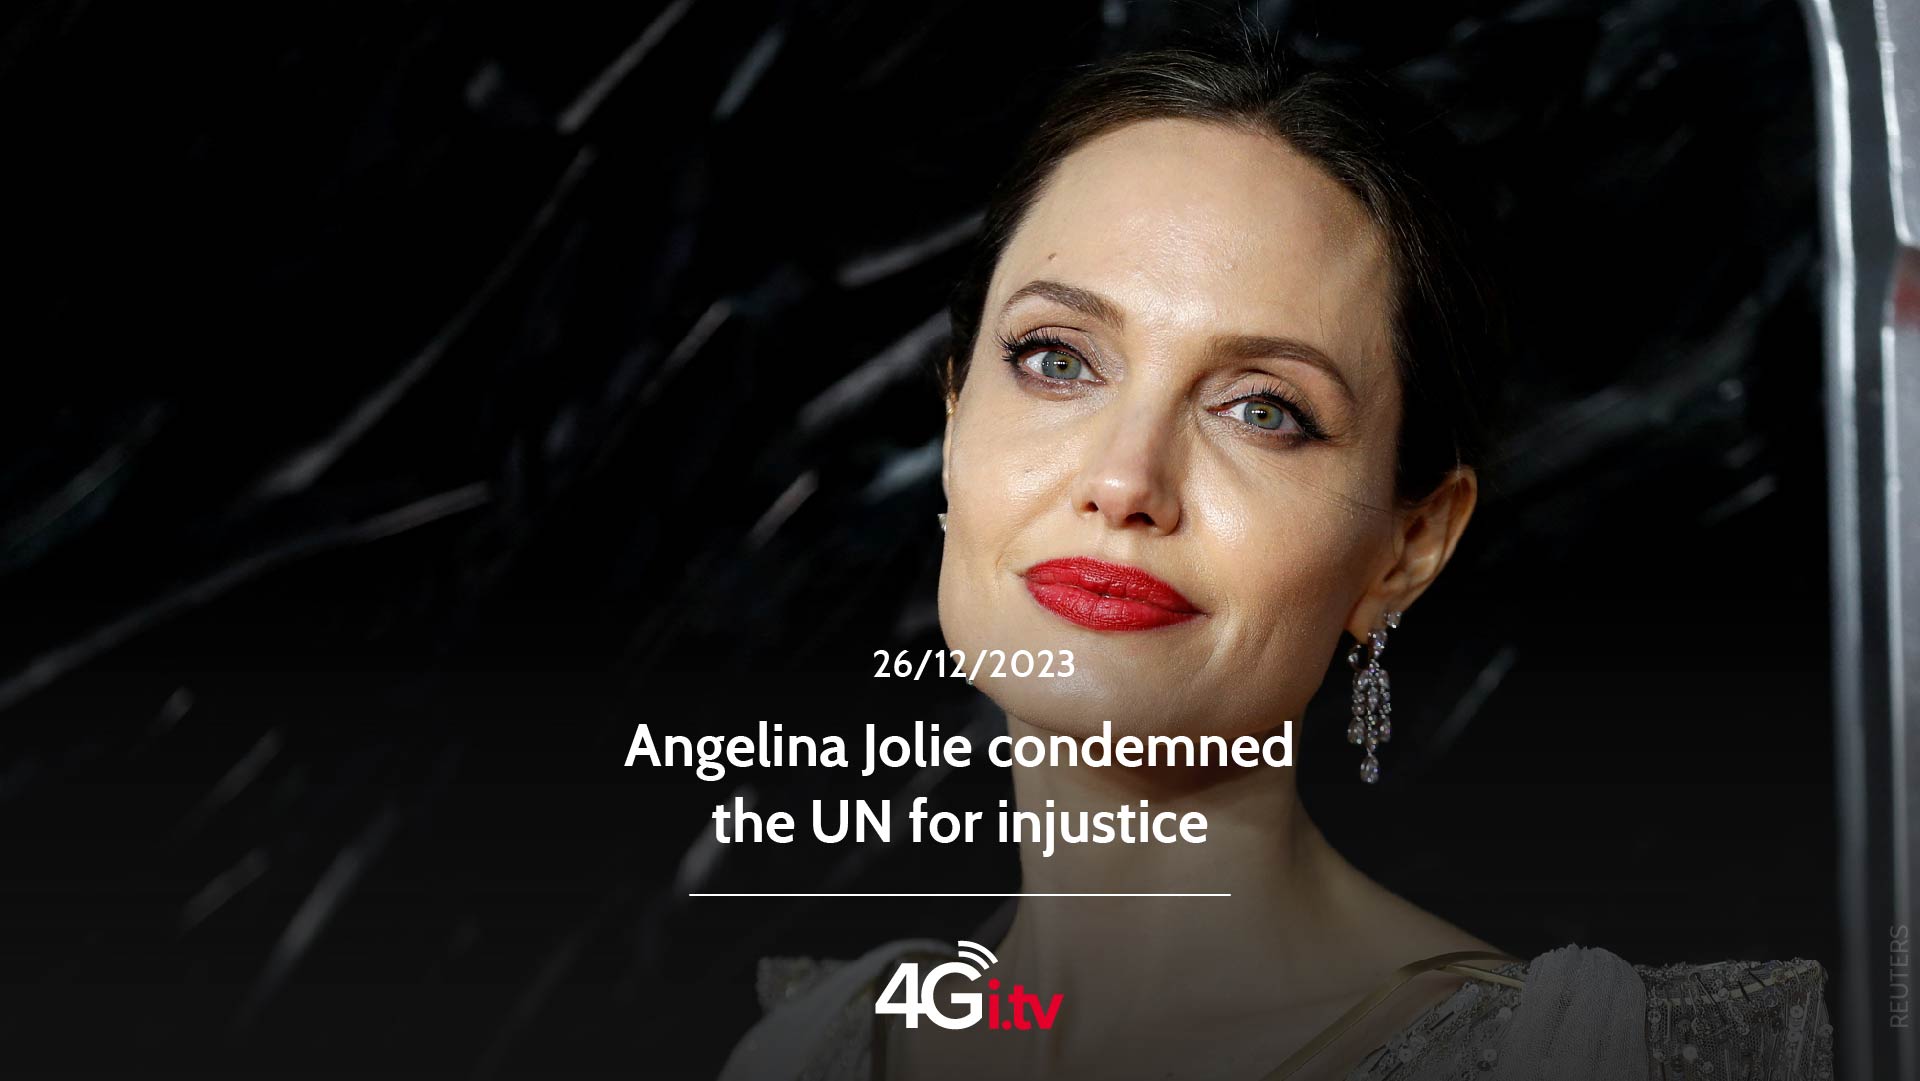 Подробнее о статье Angelina Jolie condemned the UN for injustice